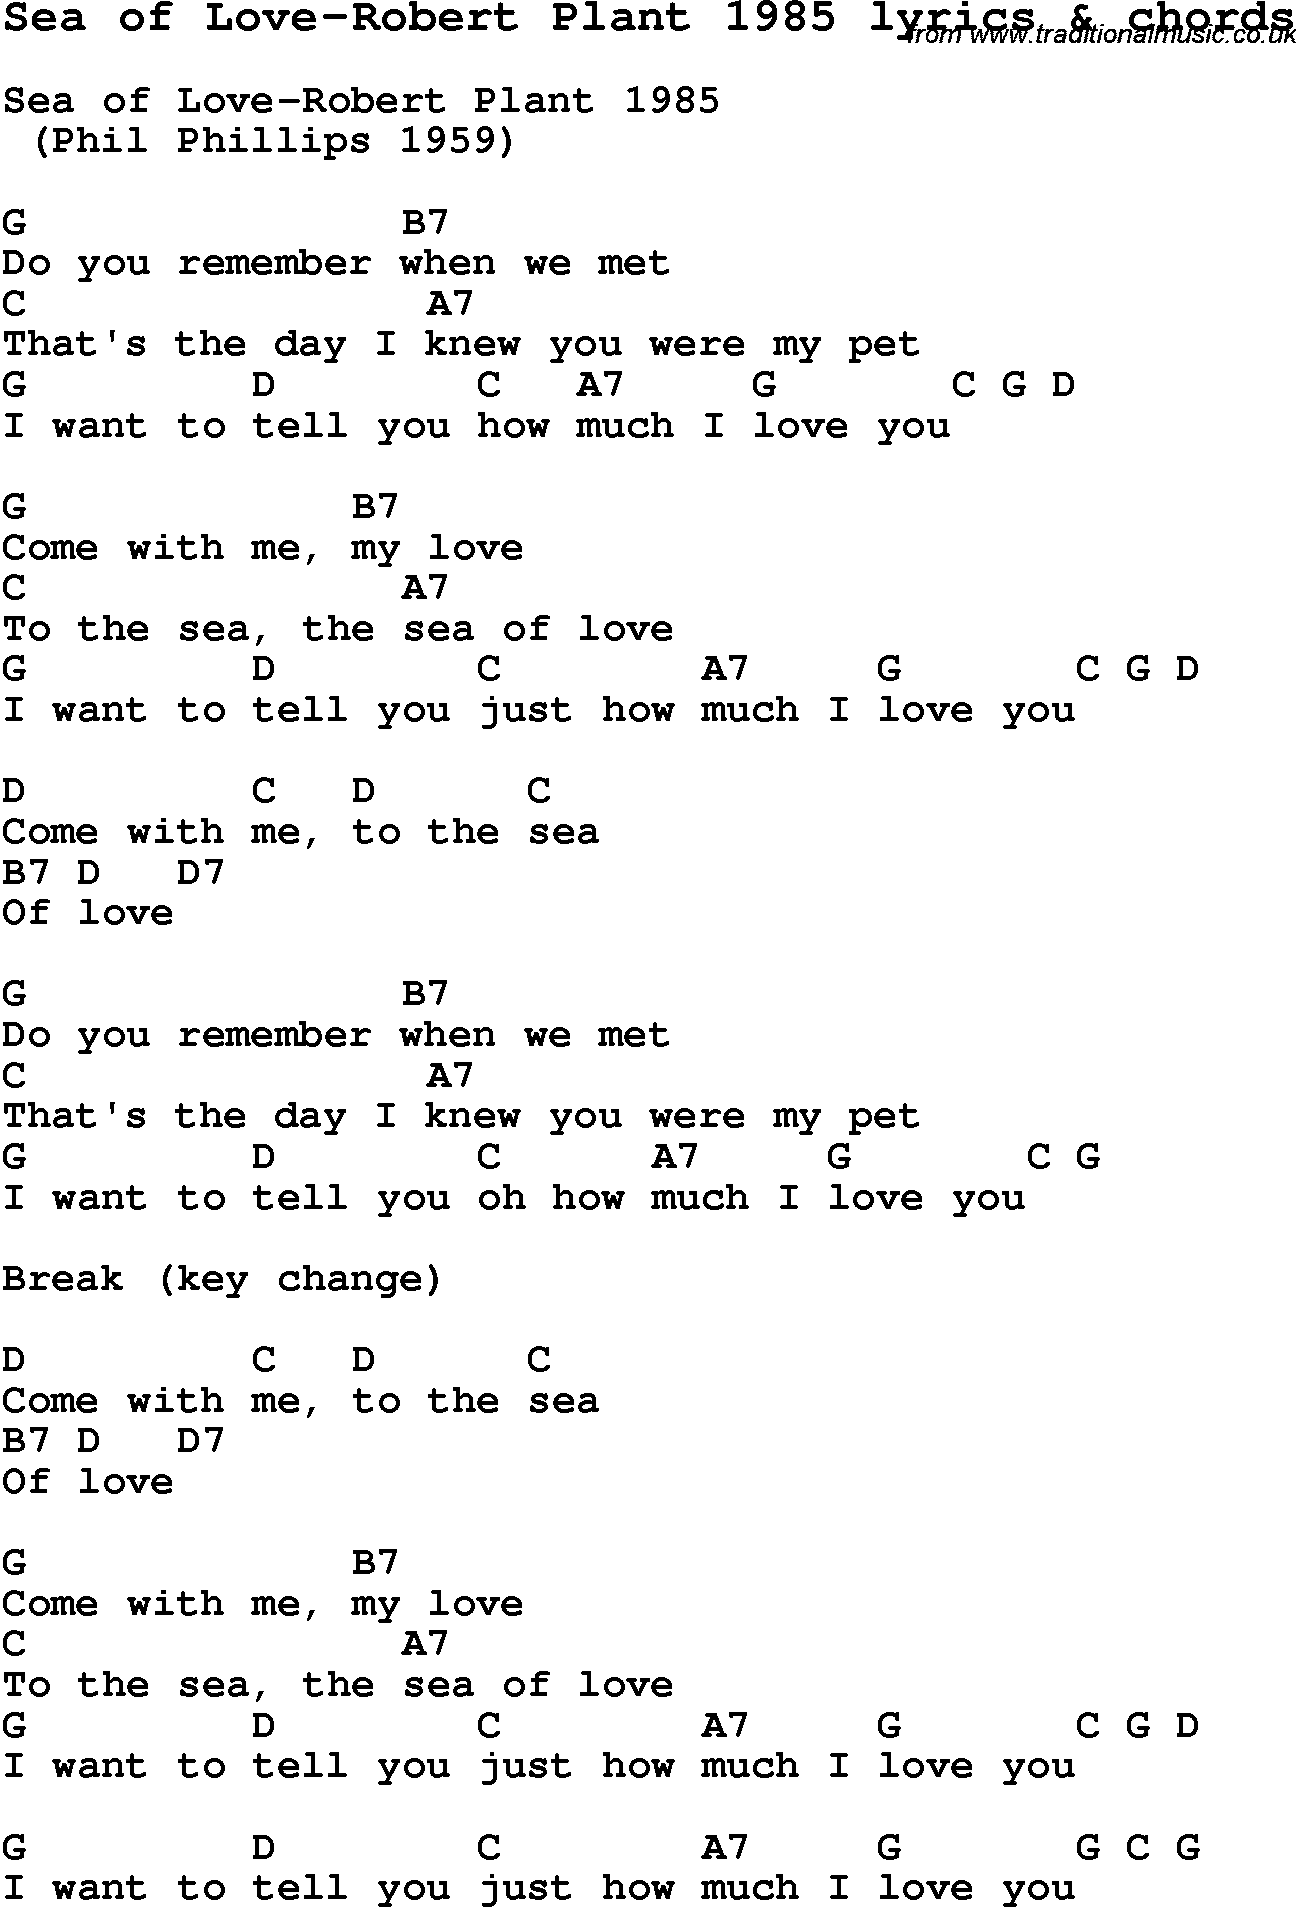 Love Song Lyrics for: Sea of Love-Robert Plant 1985 with chords for Ukulele, Guitar Banjo etc.